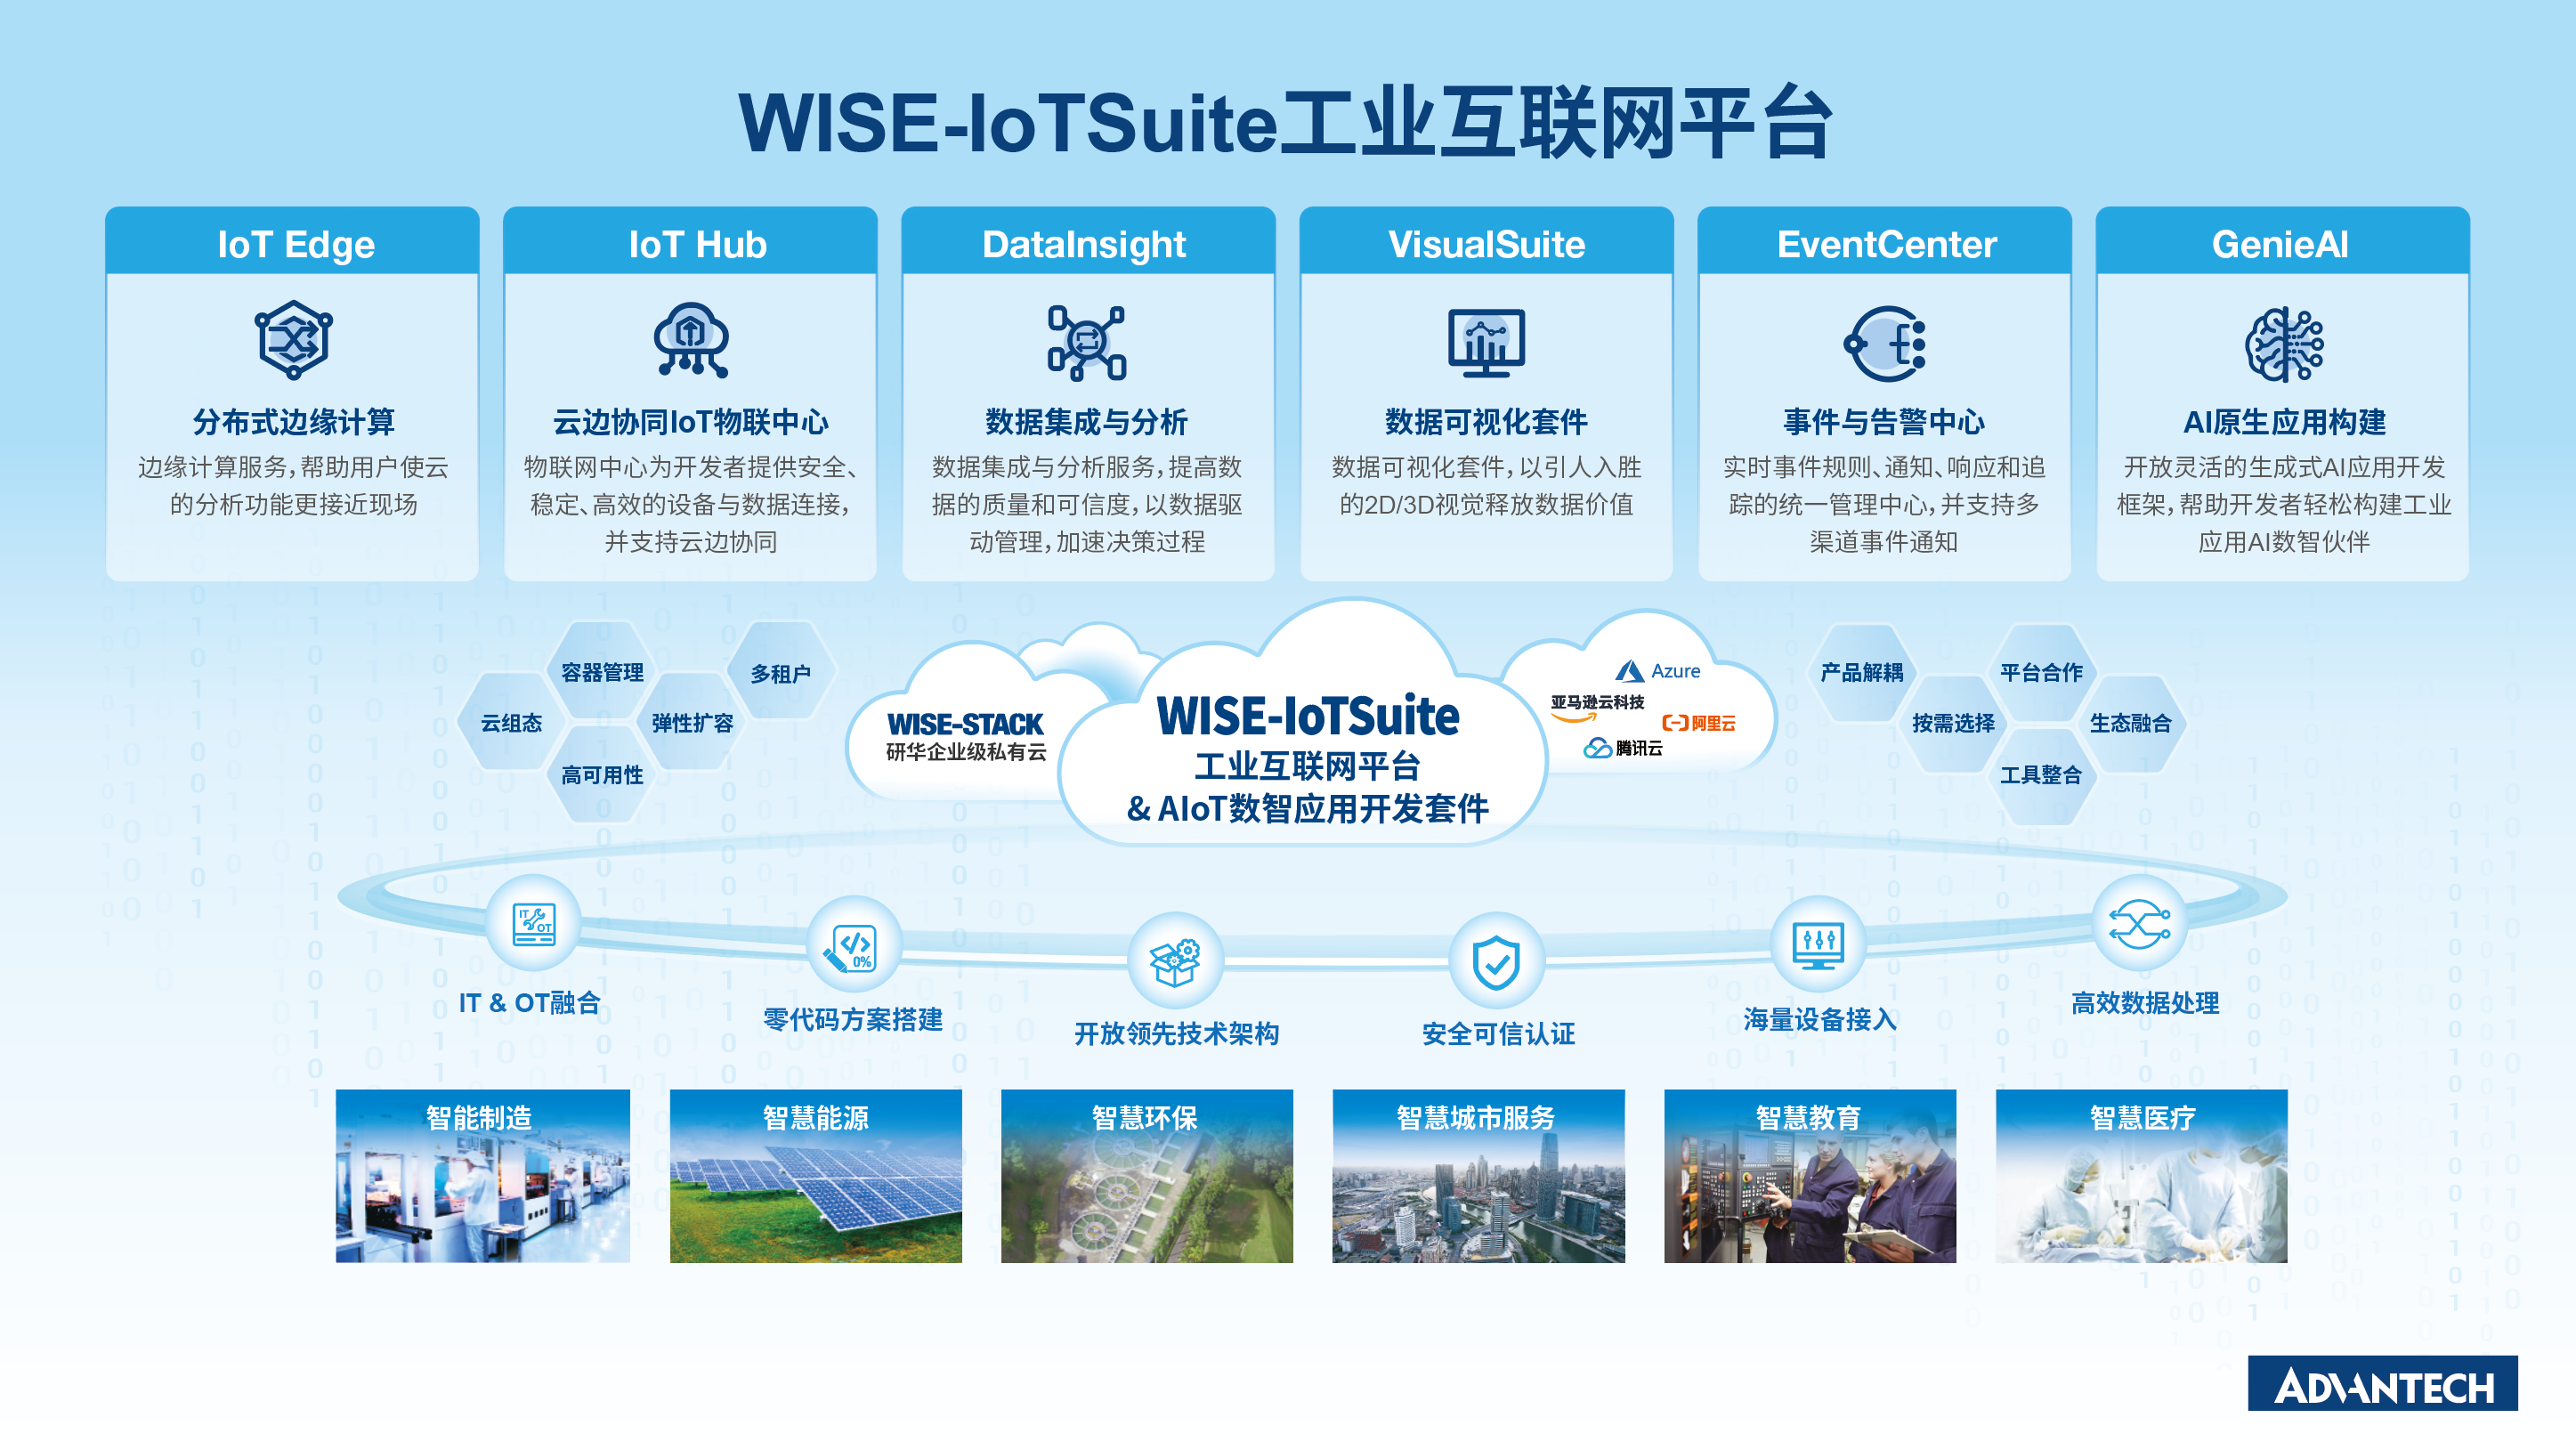 WISE-IoTSuite 工业互联网平台